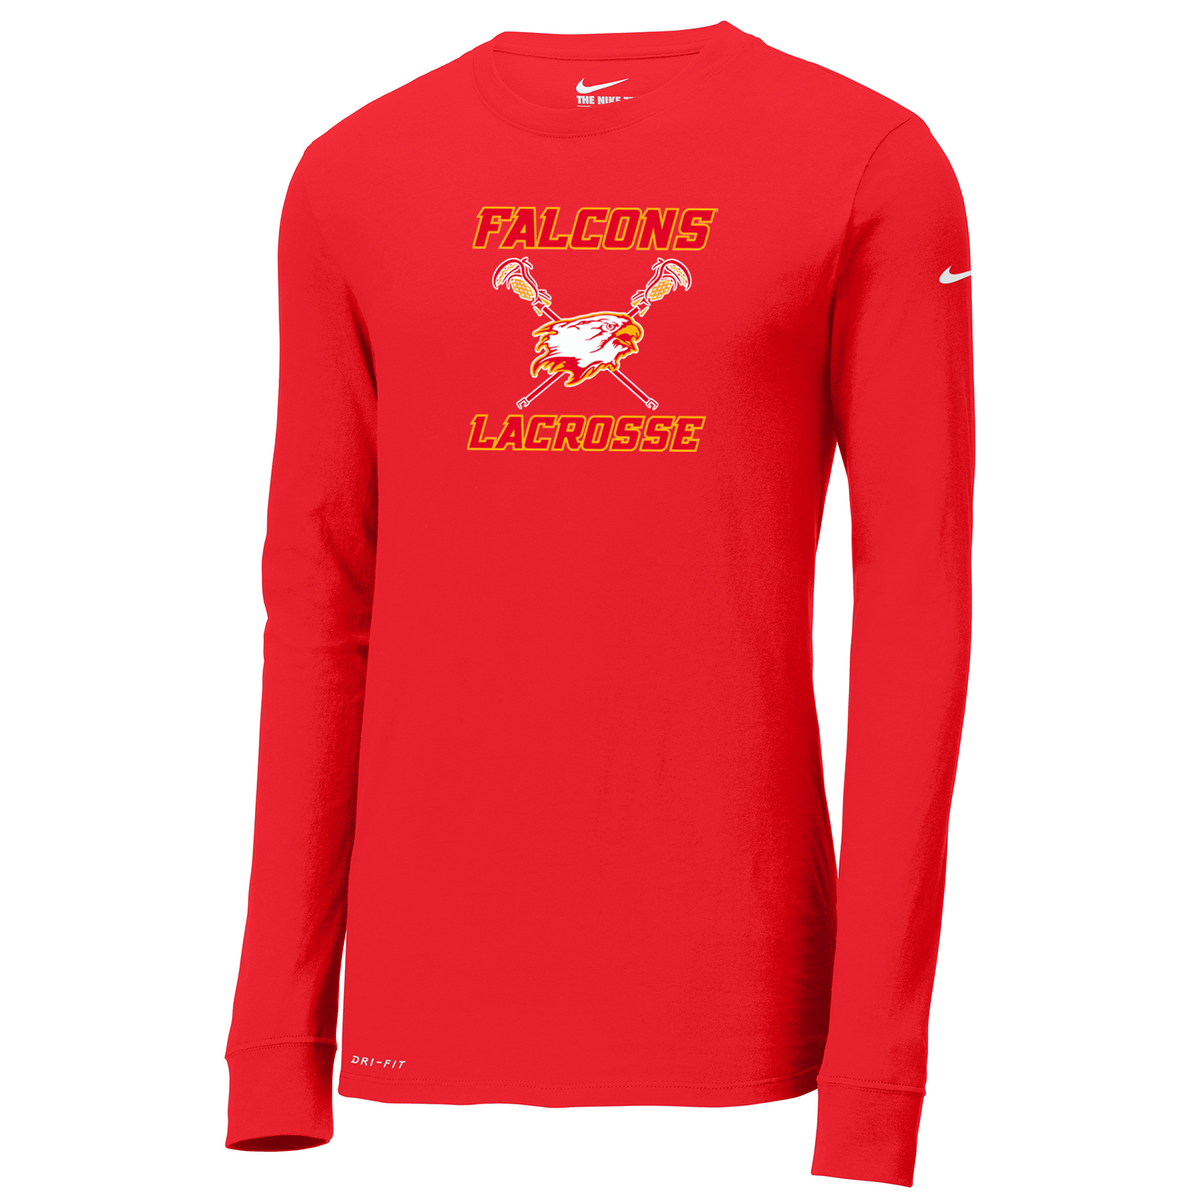 Falcons Lacrosse Club Nike Dri-FIT Long Sleeve Tee